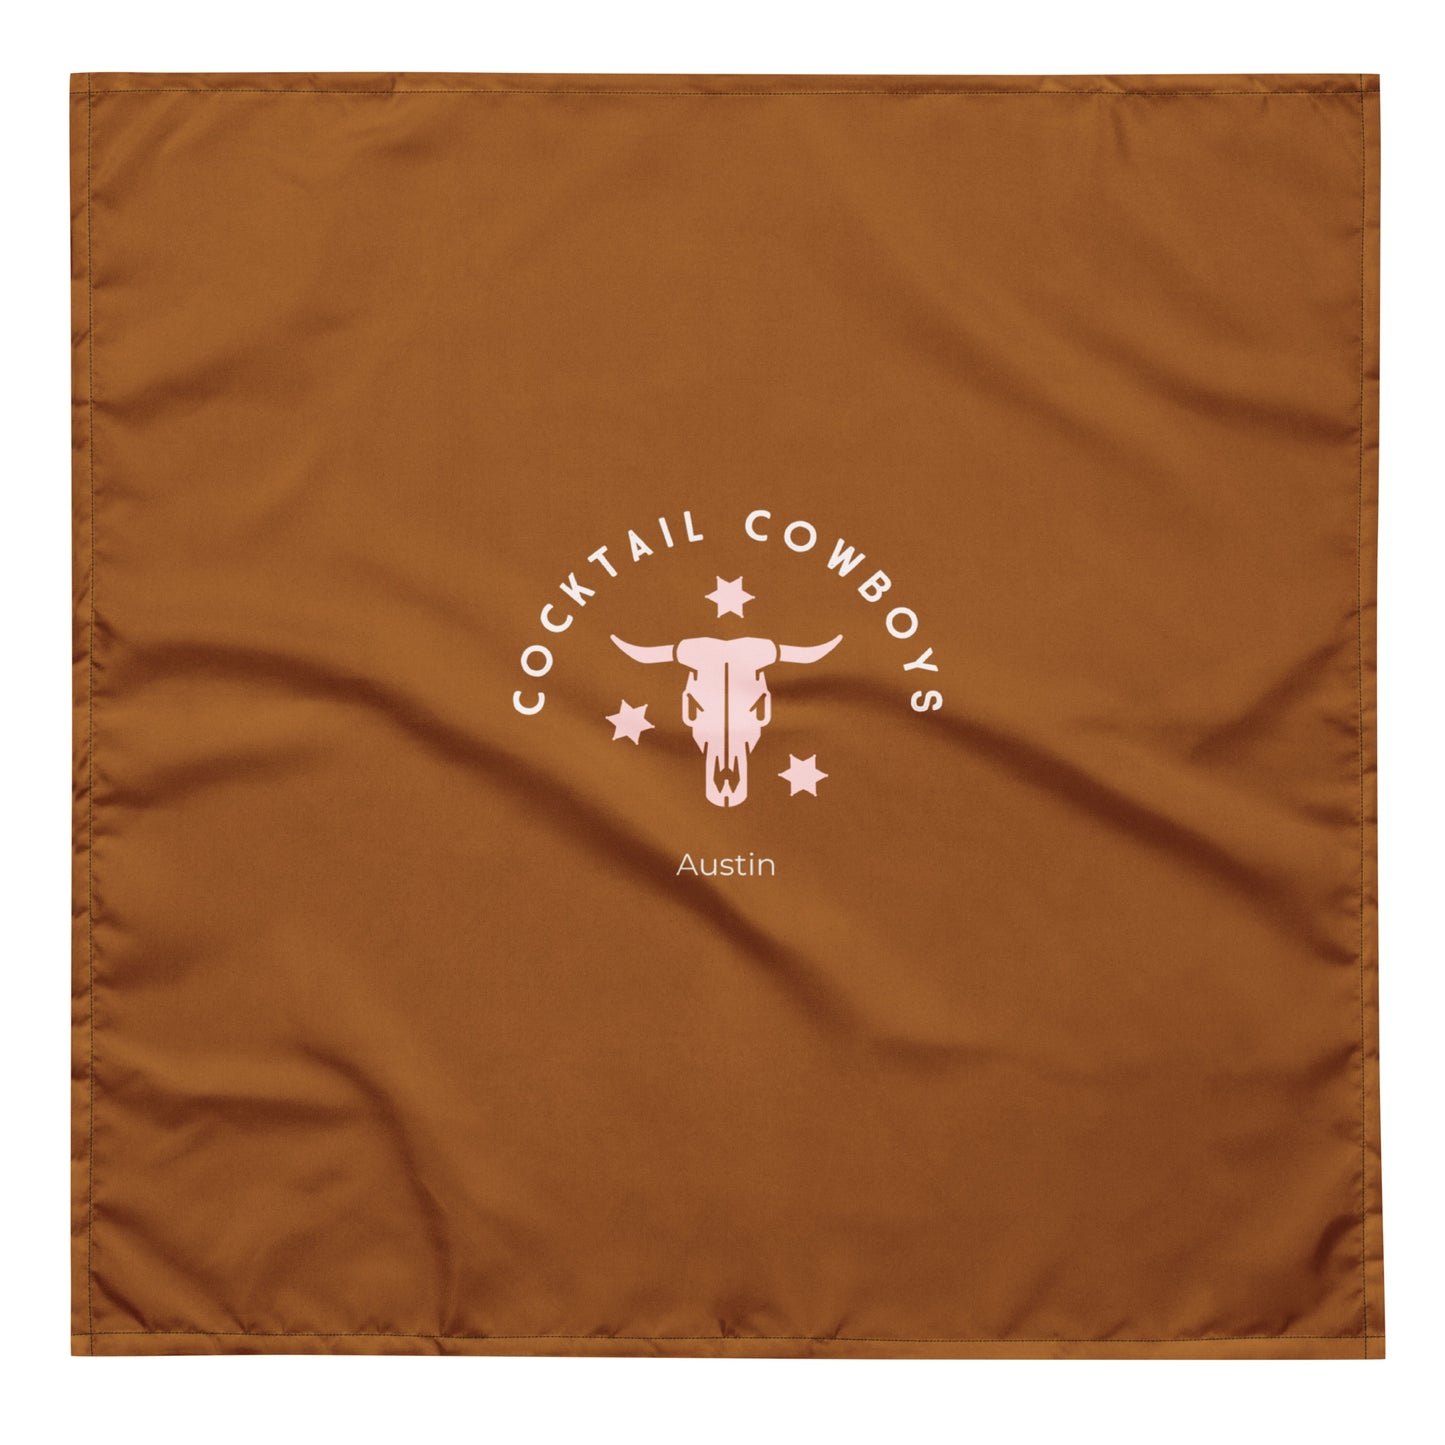 Cocktail Cowboys All-over print bandana